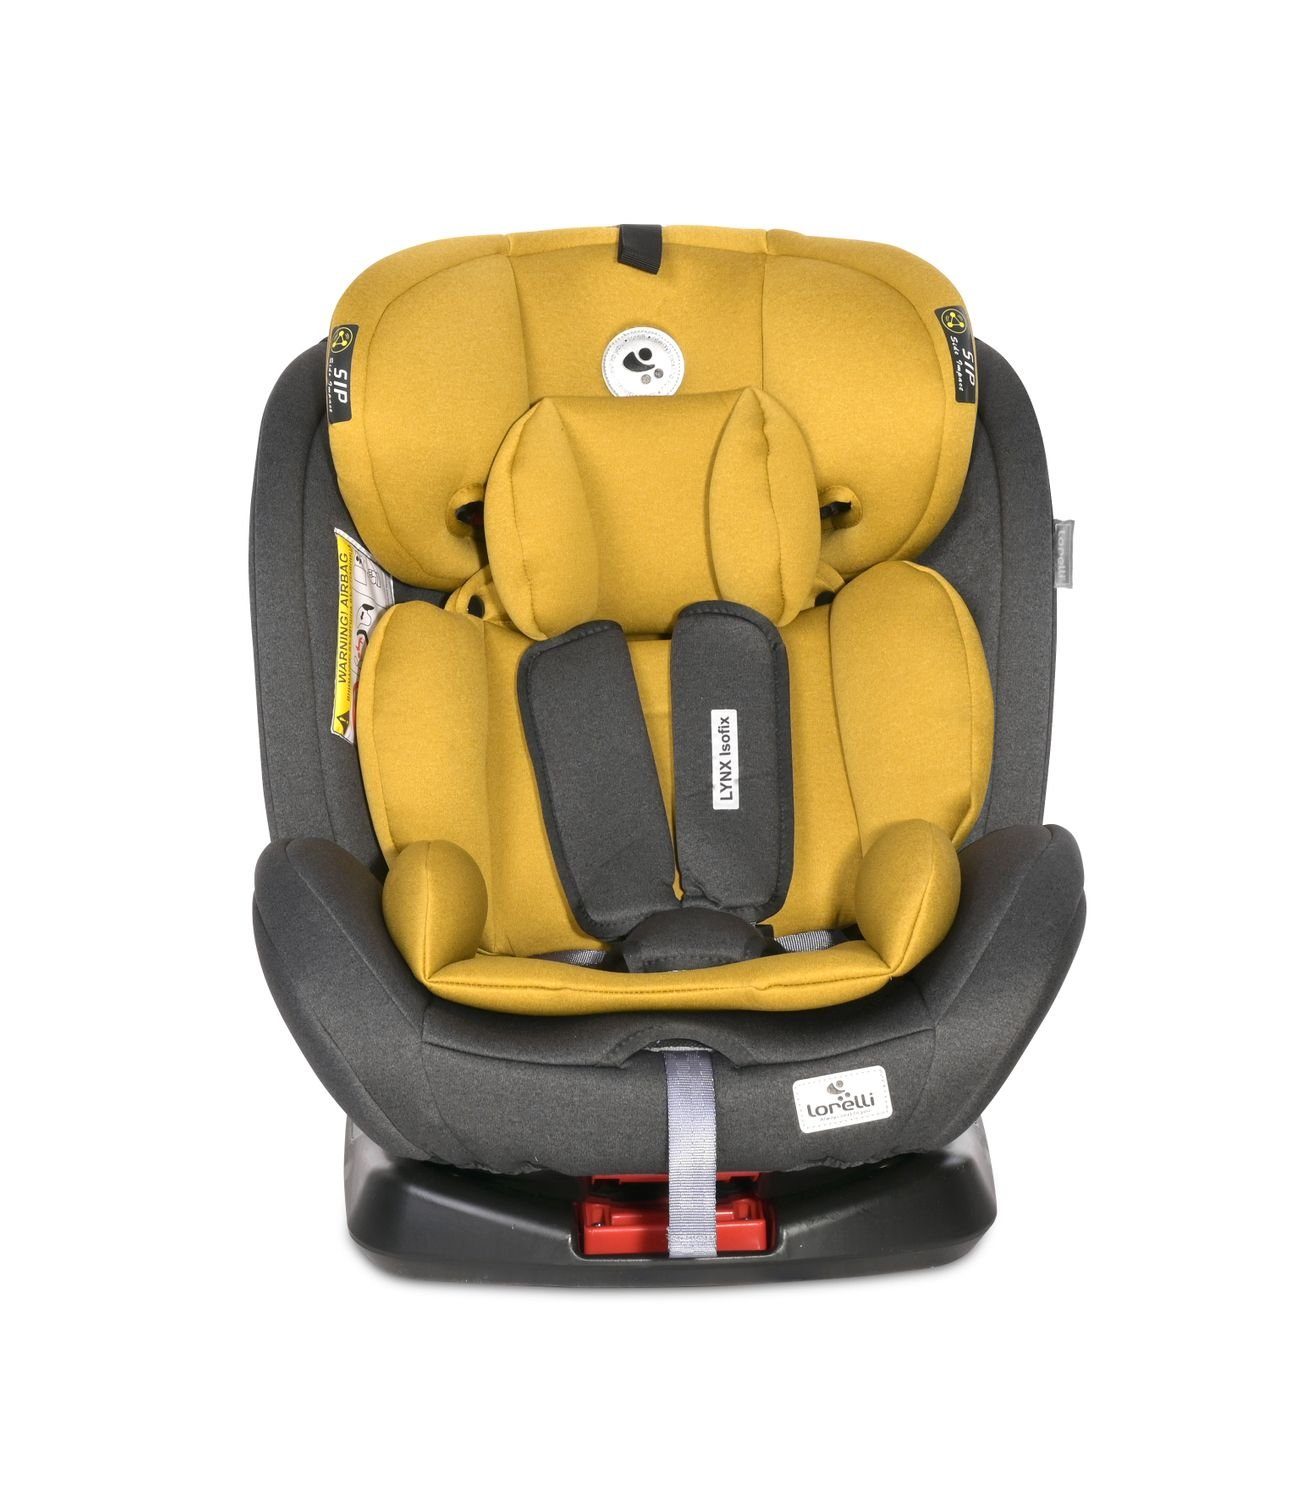 36 bis: kg, (0-36kg) Gurt 360 Grad 0+/1/2/3, Autokindersitz Kindersitz Lorelli gelb Isofix, Gruppe Lynx Drehung,